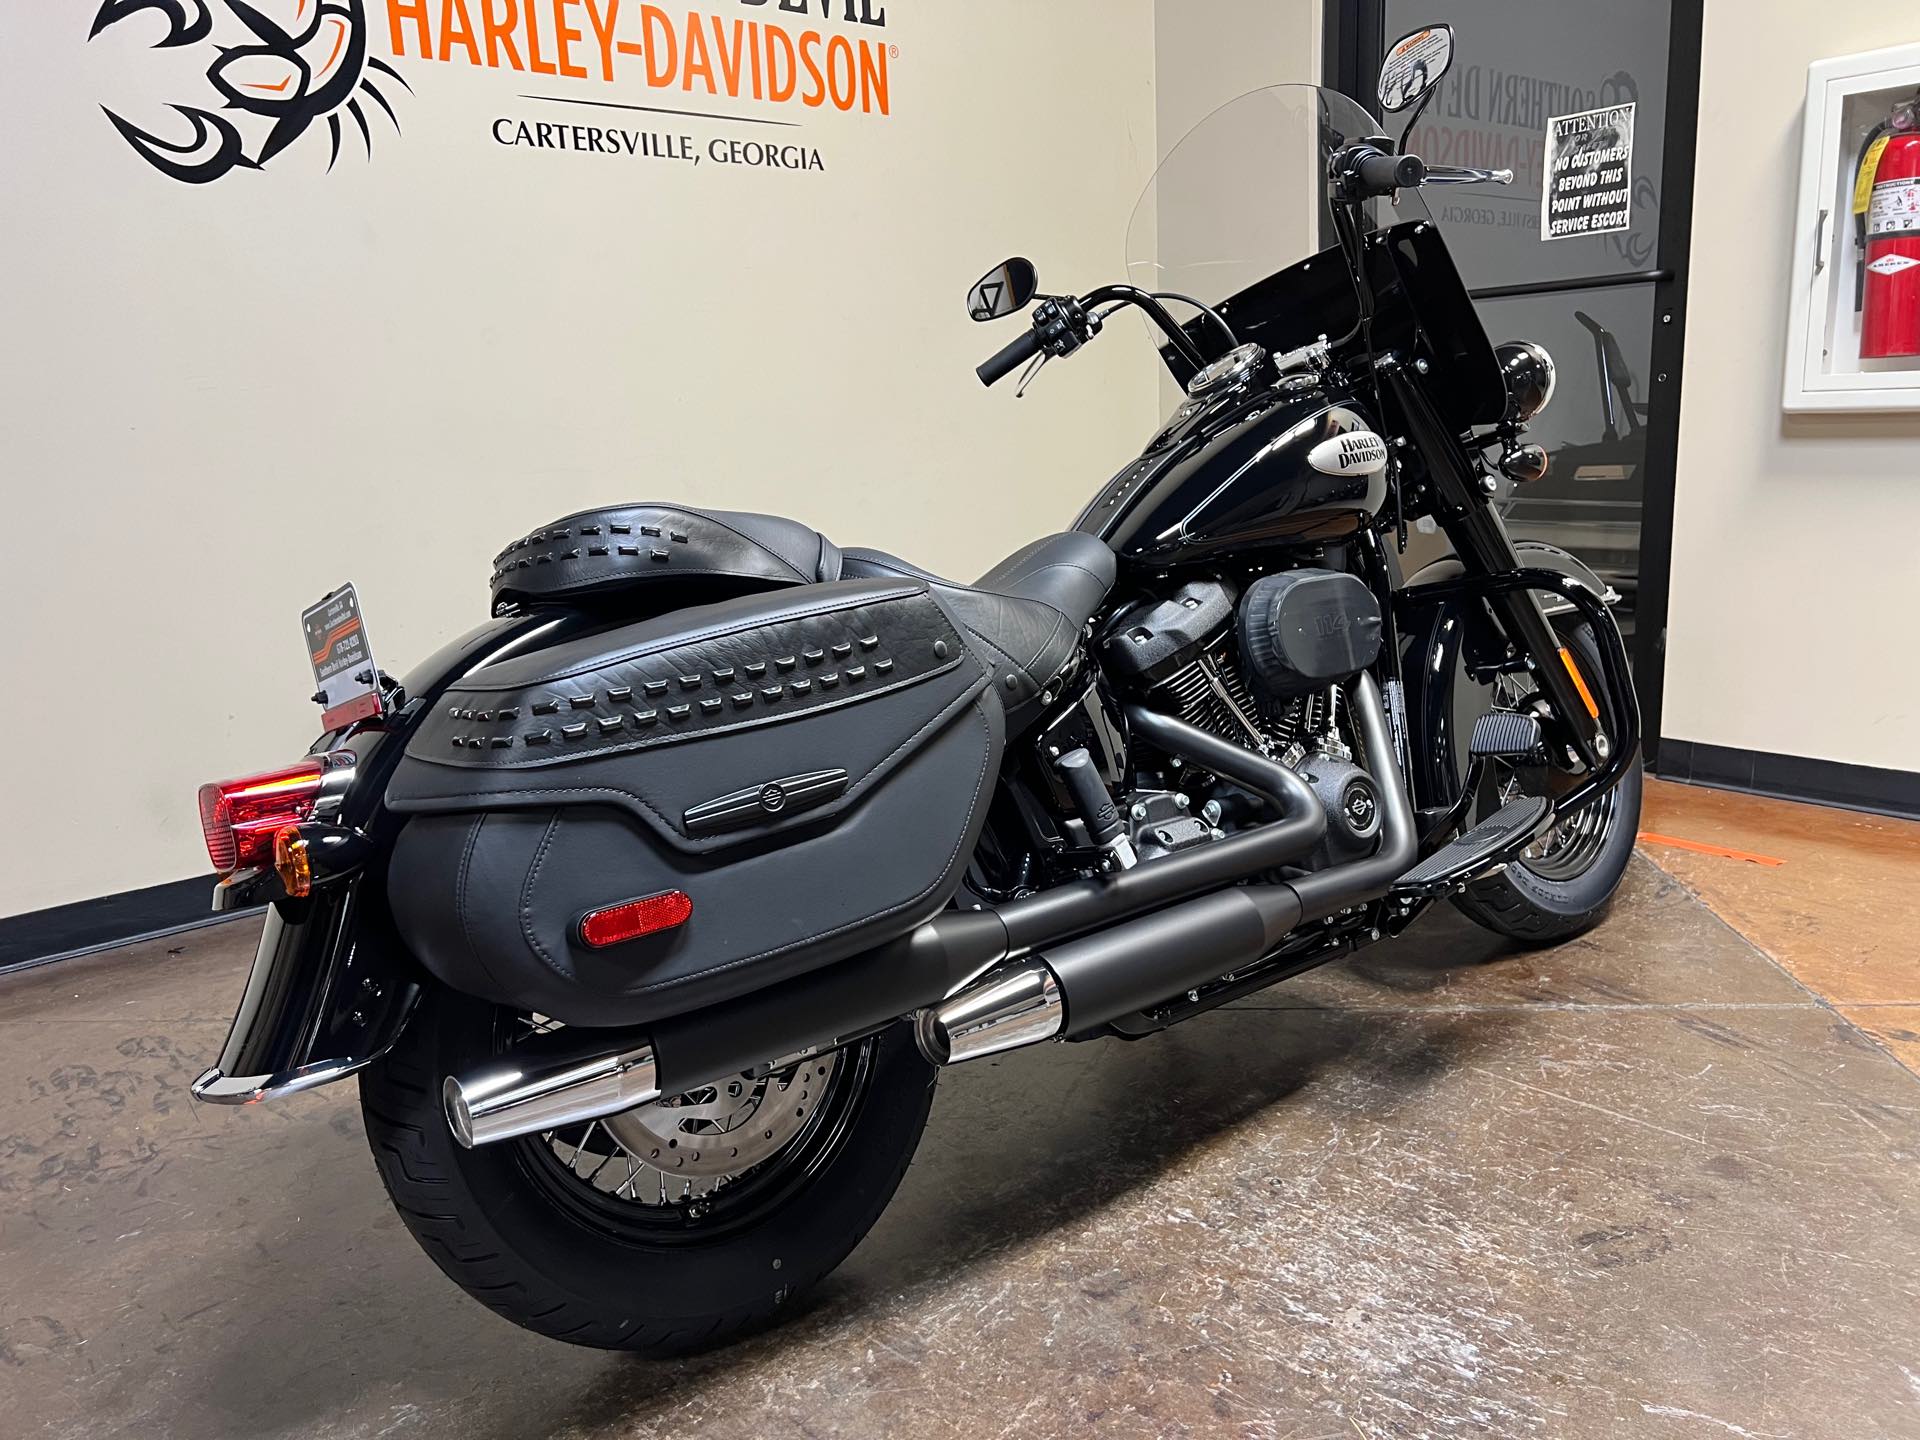 2023 Harley-Davidson Softail Heritage Classic at Southern Devil Harley-Davidson